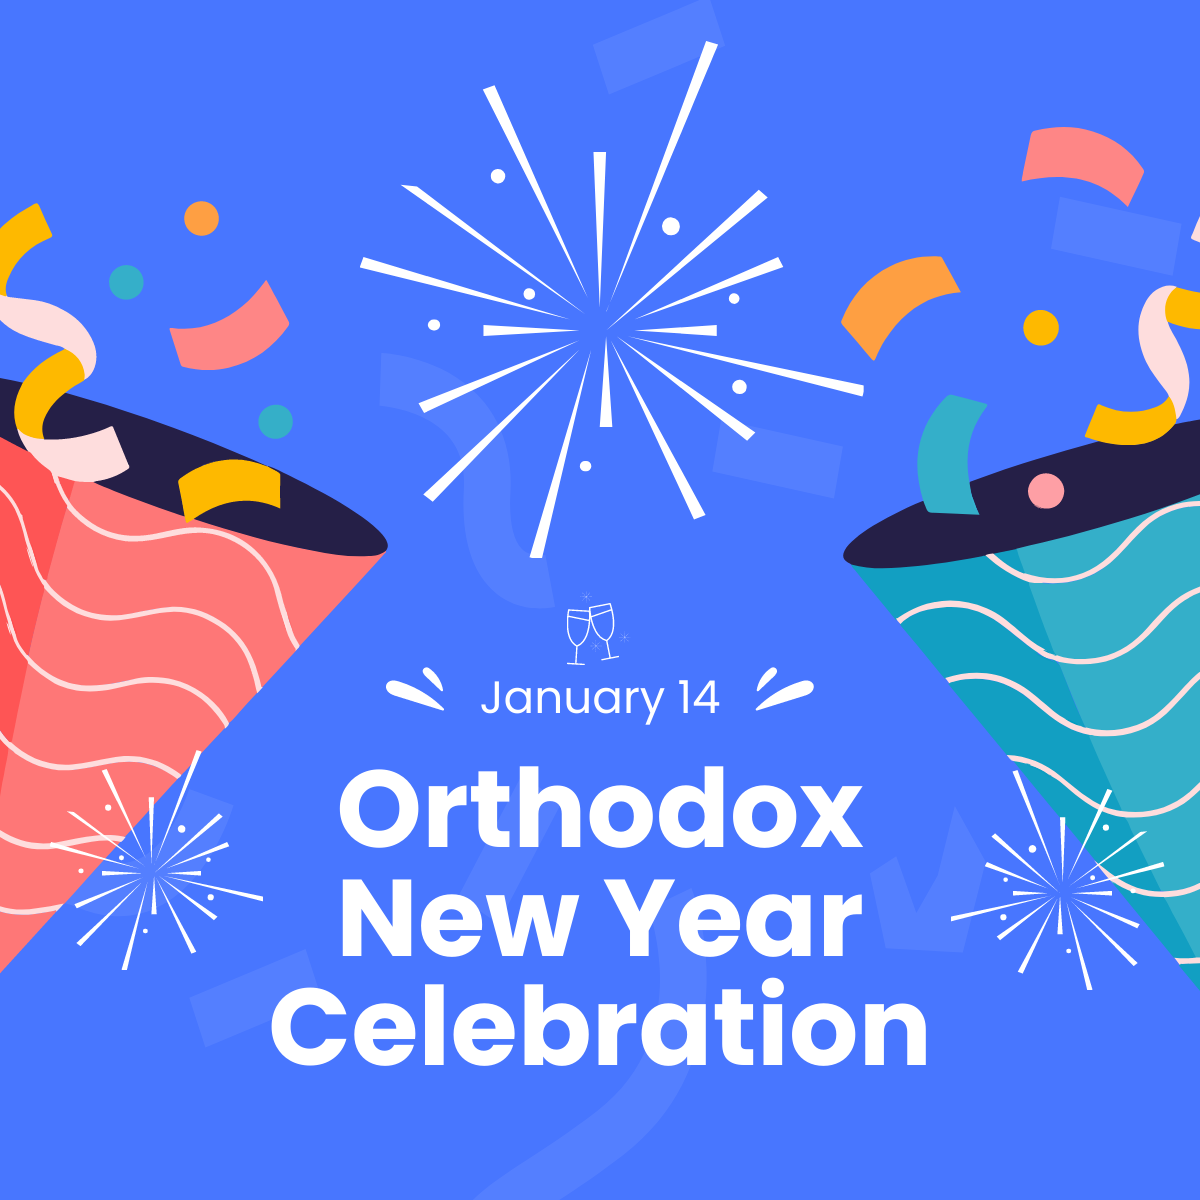 Orthodox New Year Celebration Linkedin Post Template